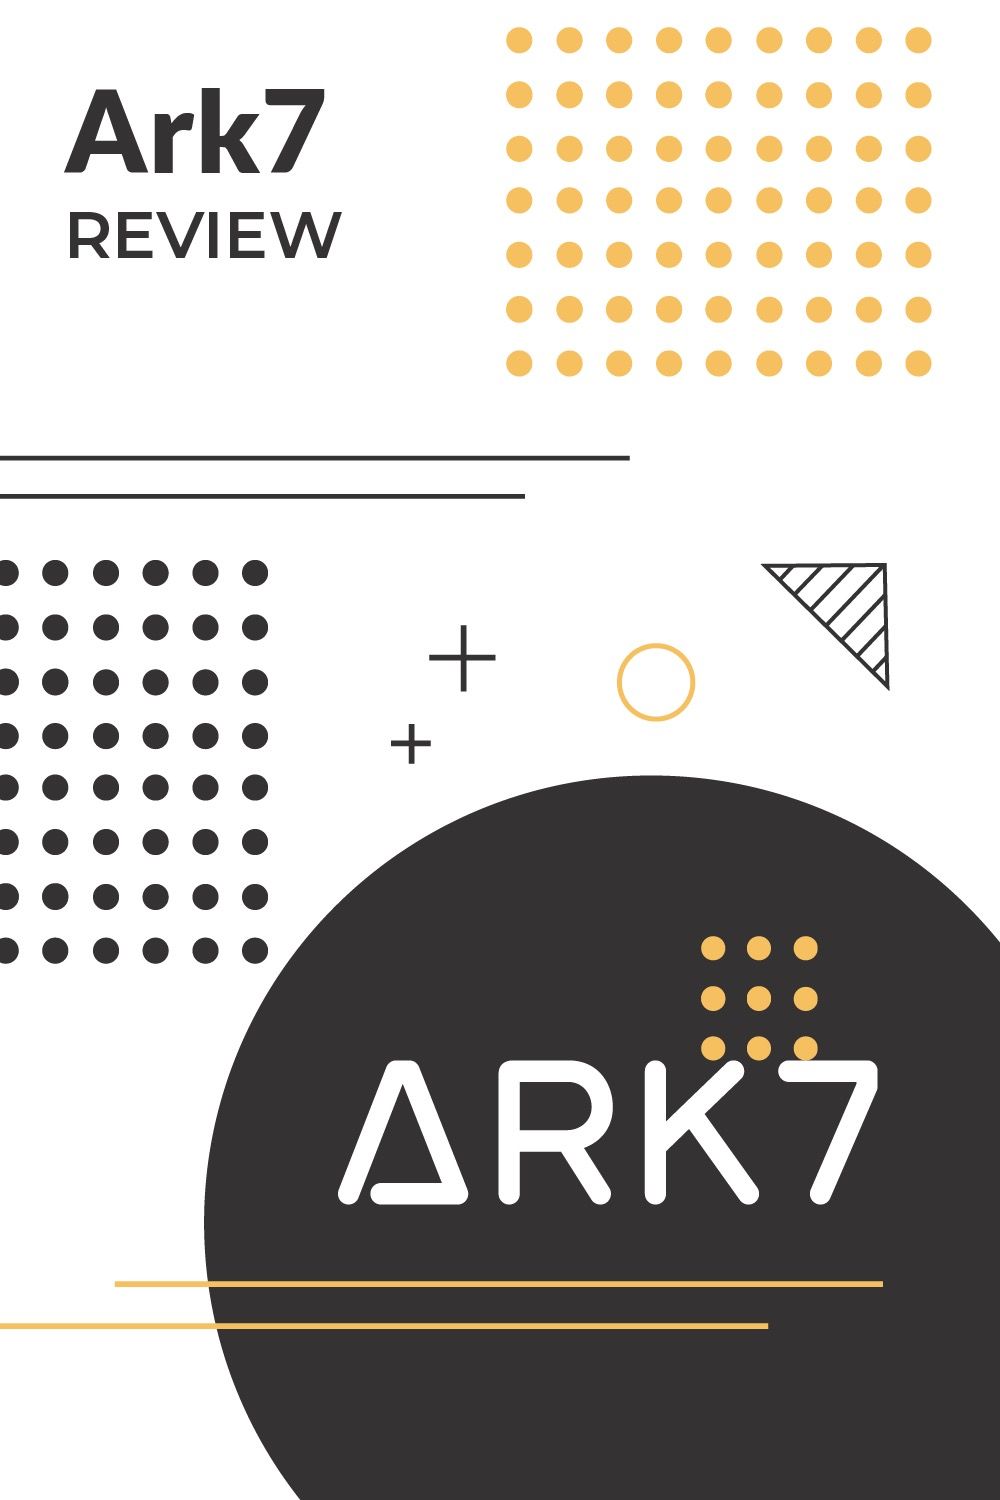 ark7 review pinterest image